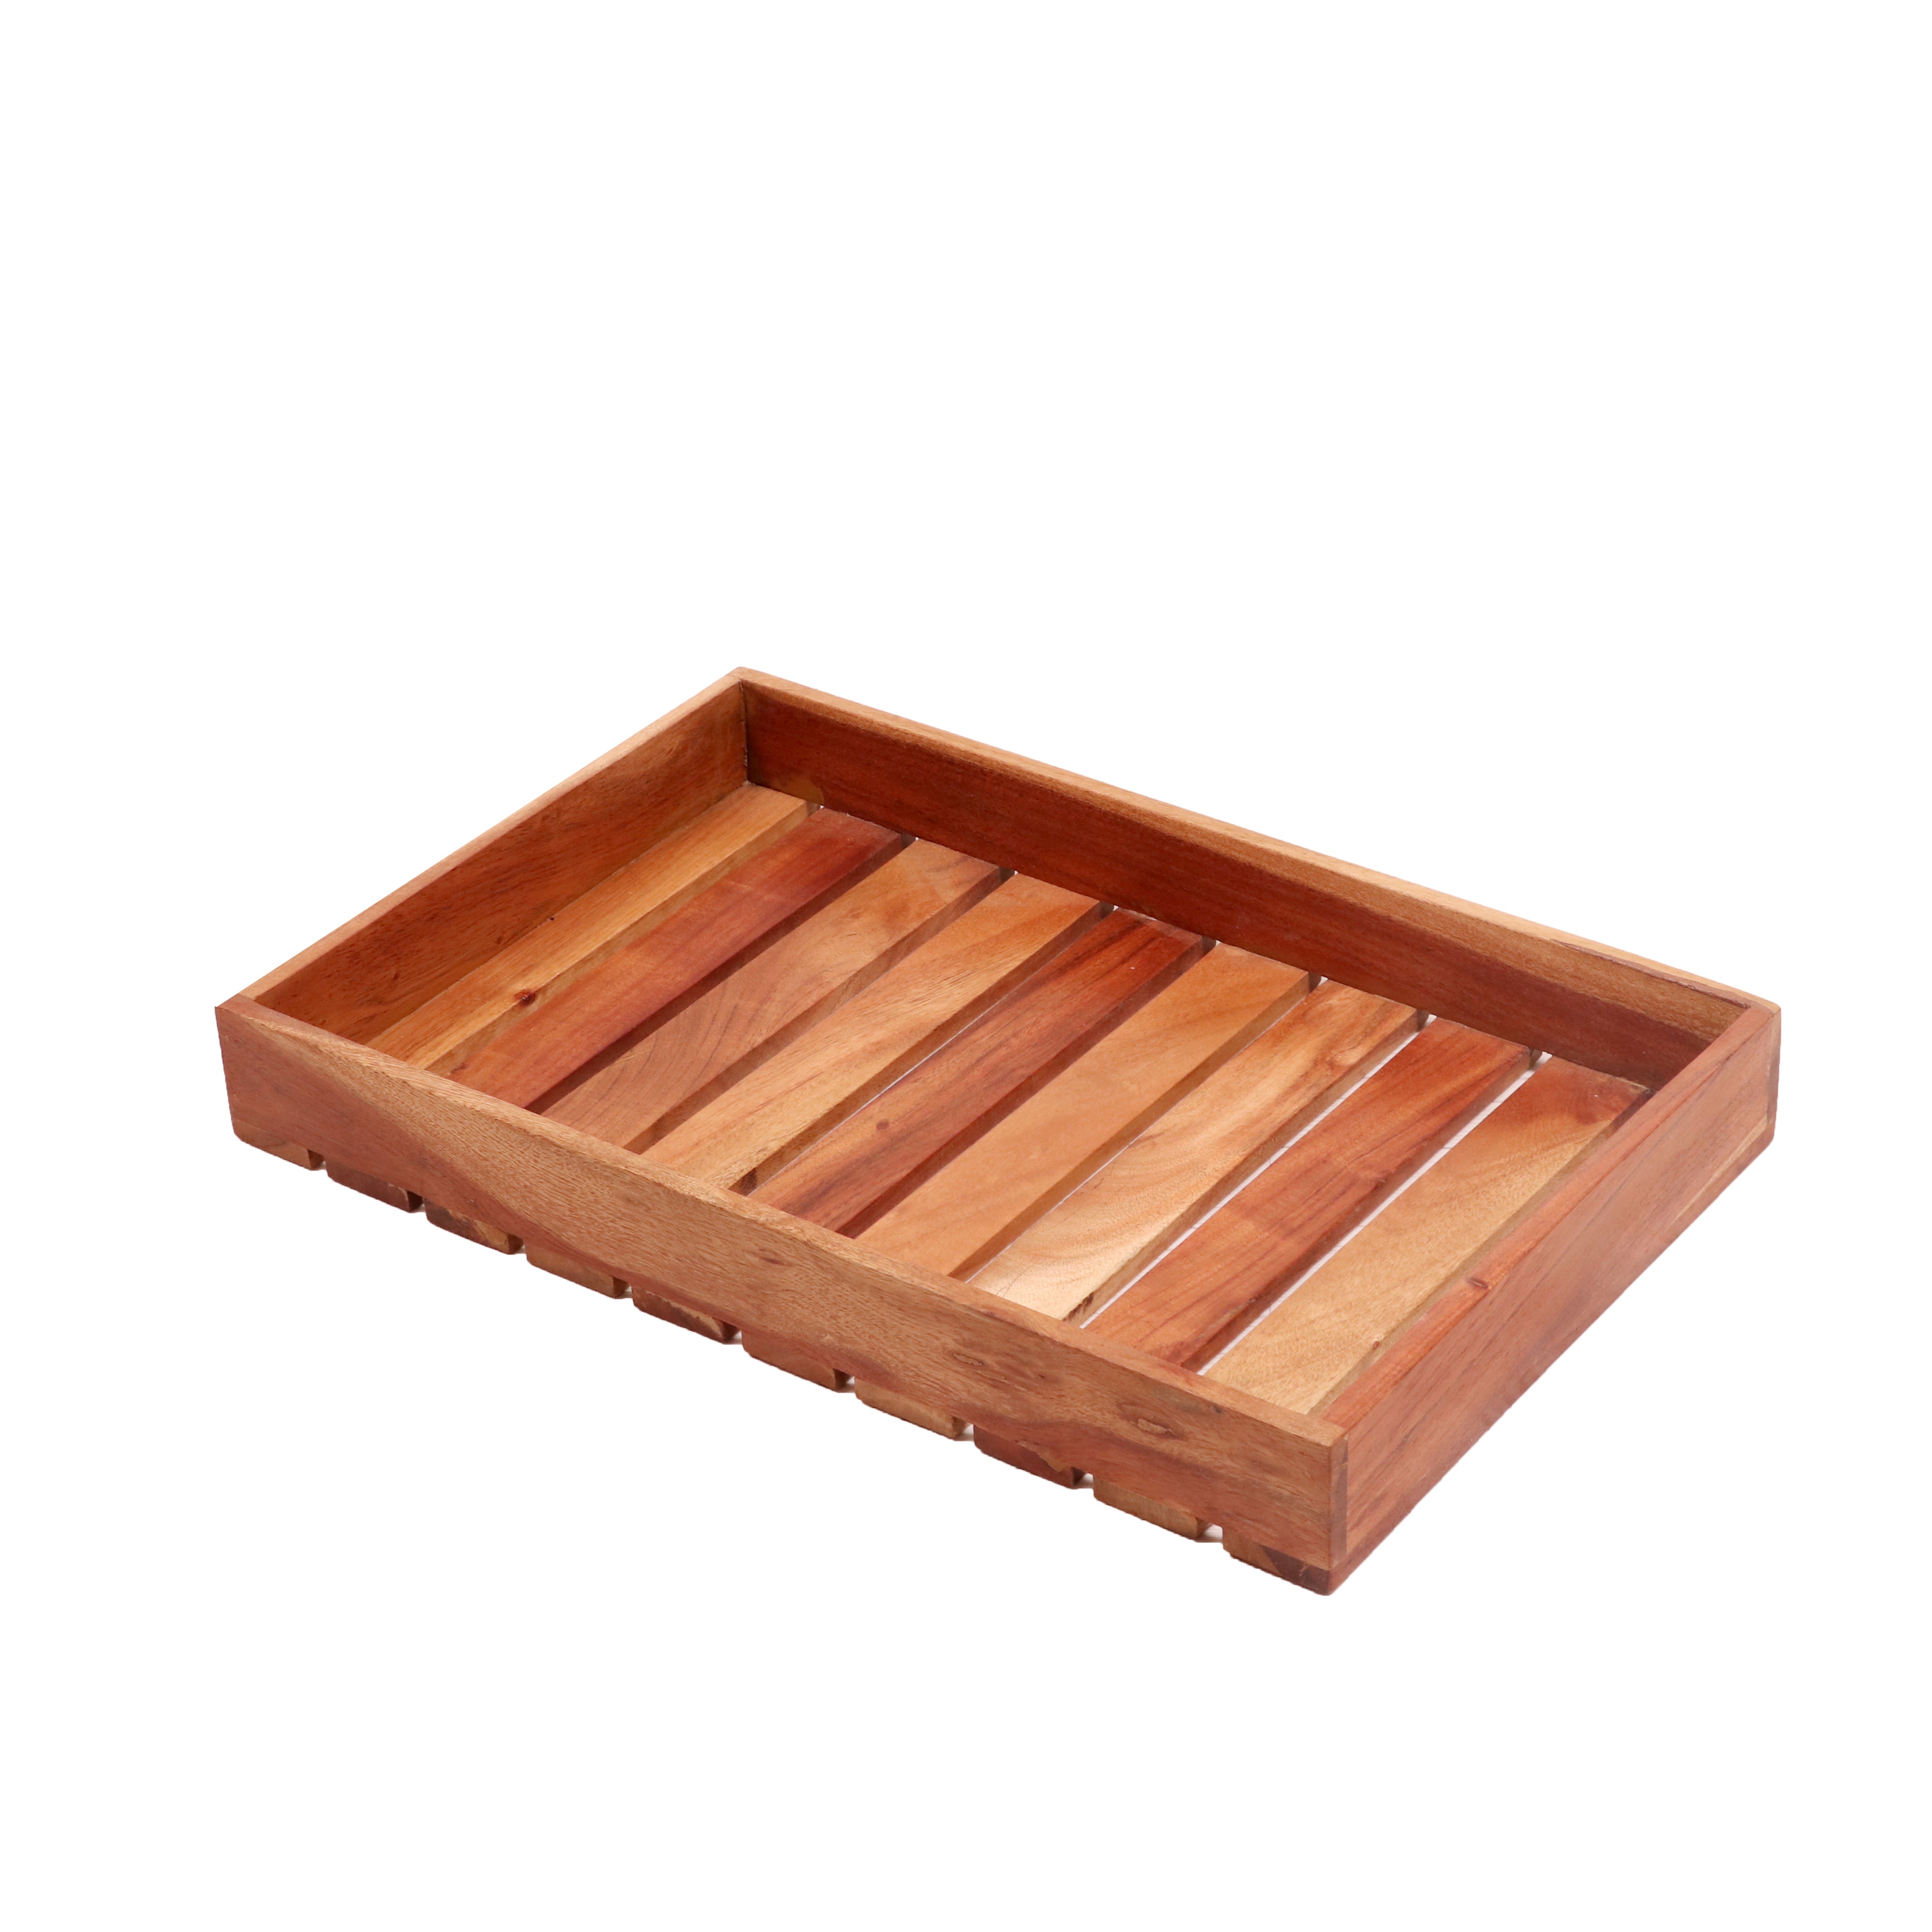 Long wooden strip tray Tray